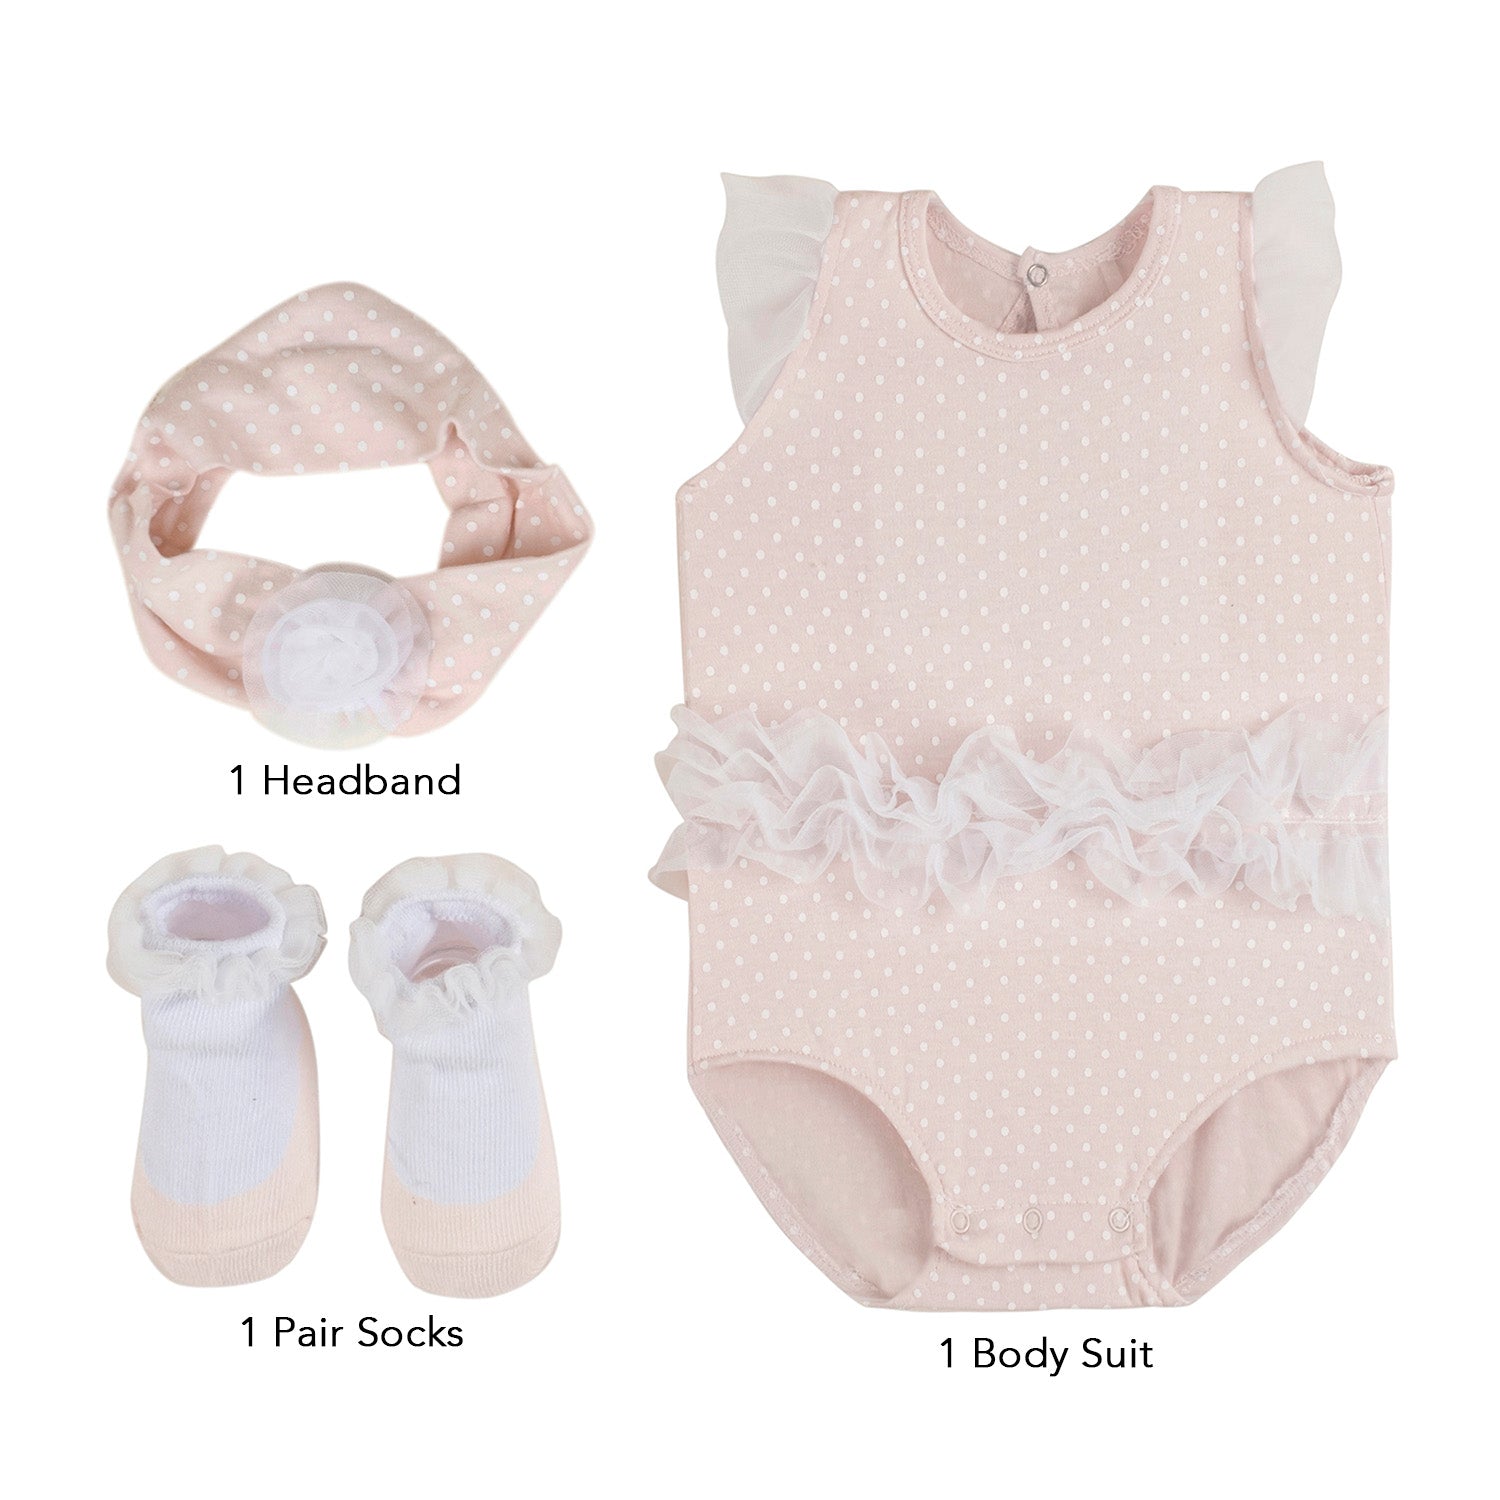 Baby Moo Polka Dotted Gift Set 3 Piece With Bodysuit, Socks And Headband - Cream